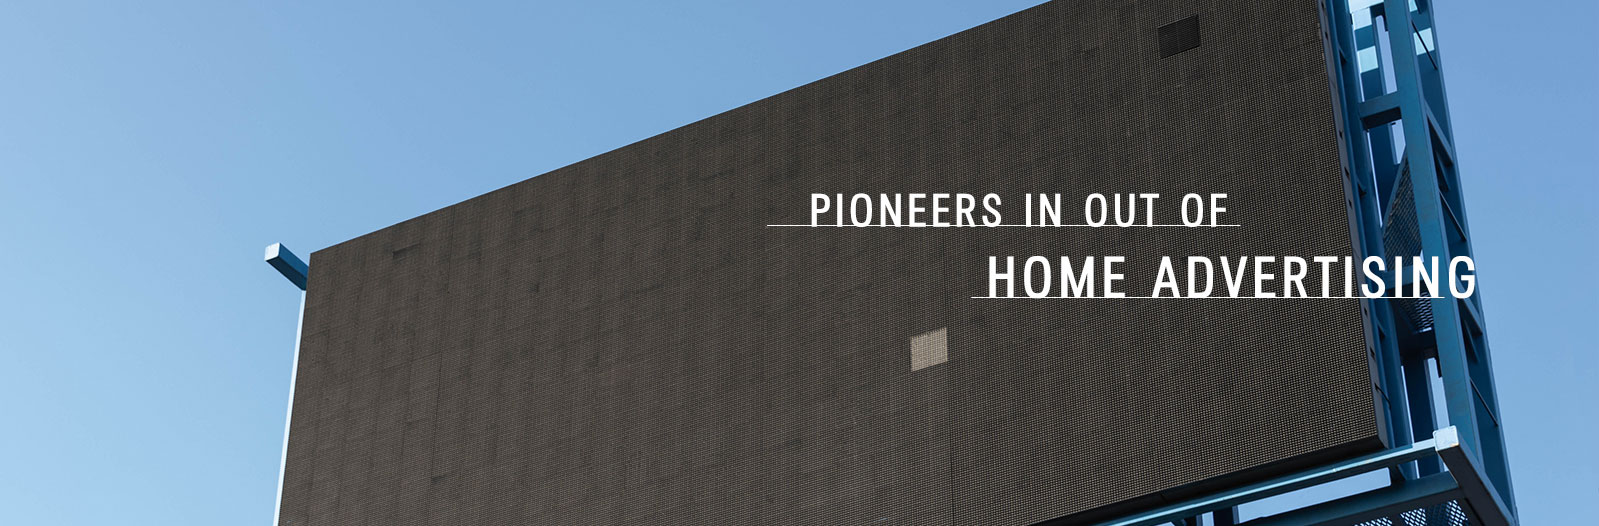 pioneers-in-outof-home-advertising-space-sign-kerala